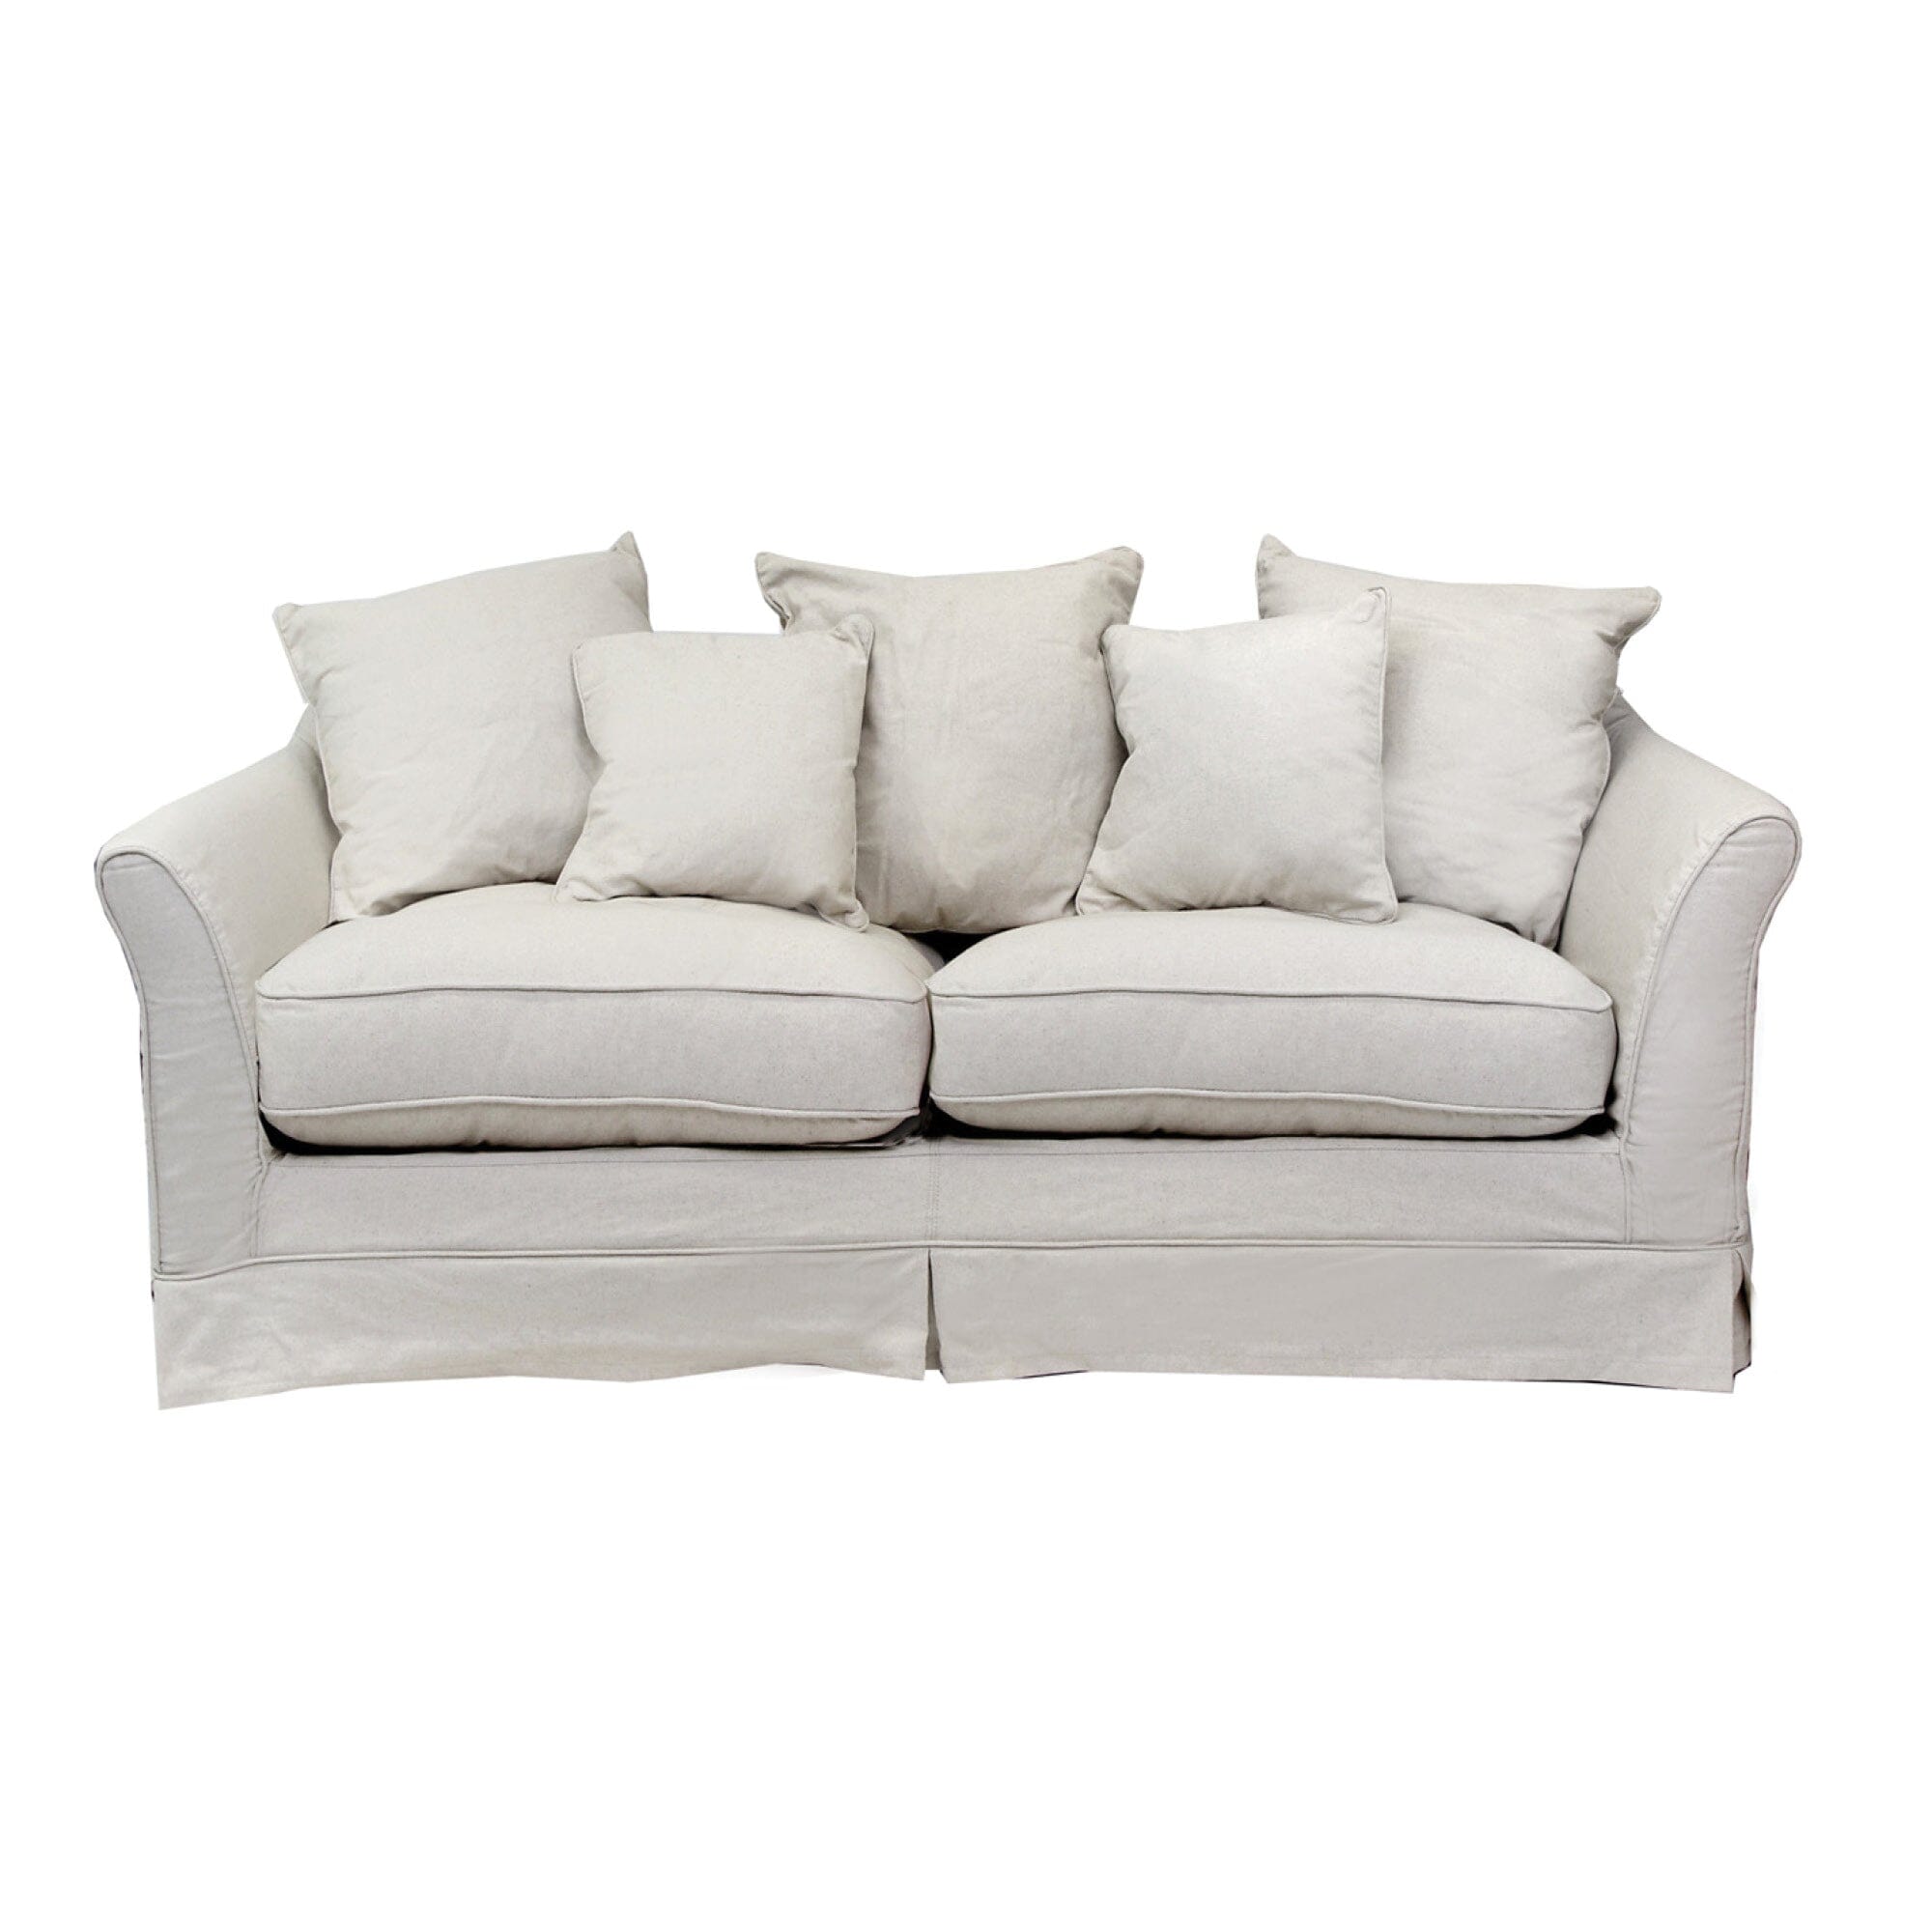 Lisboa Sofa - 3 Seater Living Furniture Beachwood Designs Salt &amp; Pepper Linen Cotton 